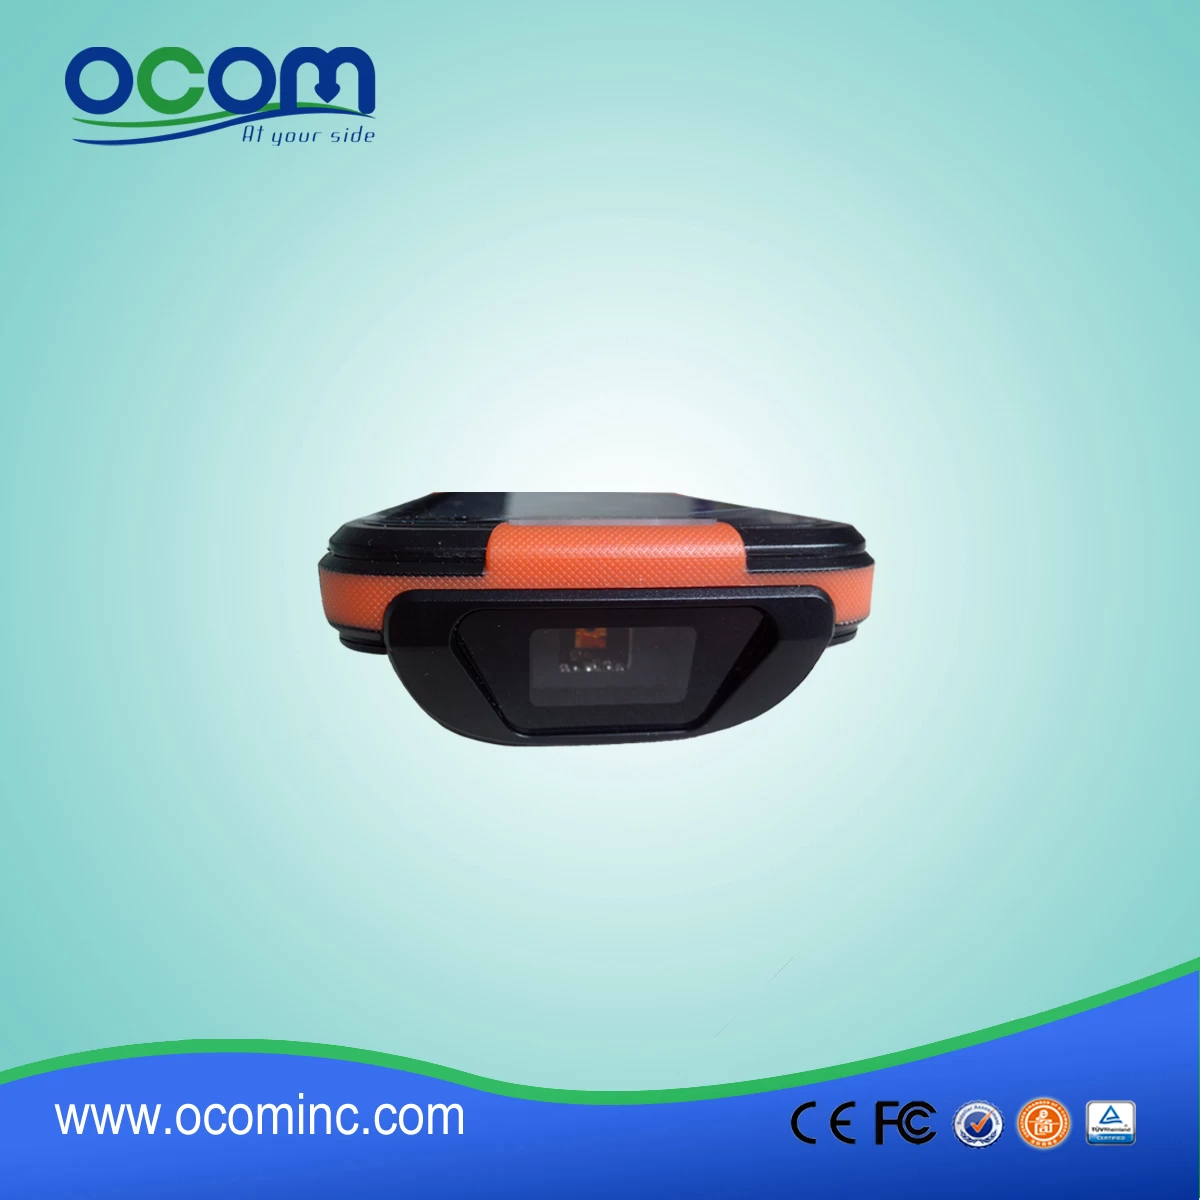 OCBS-D8000 handheld andriod pos terminal